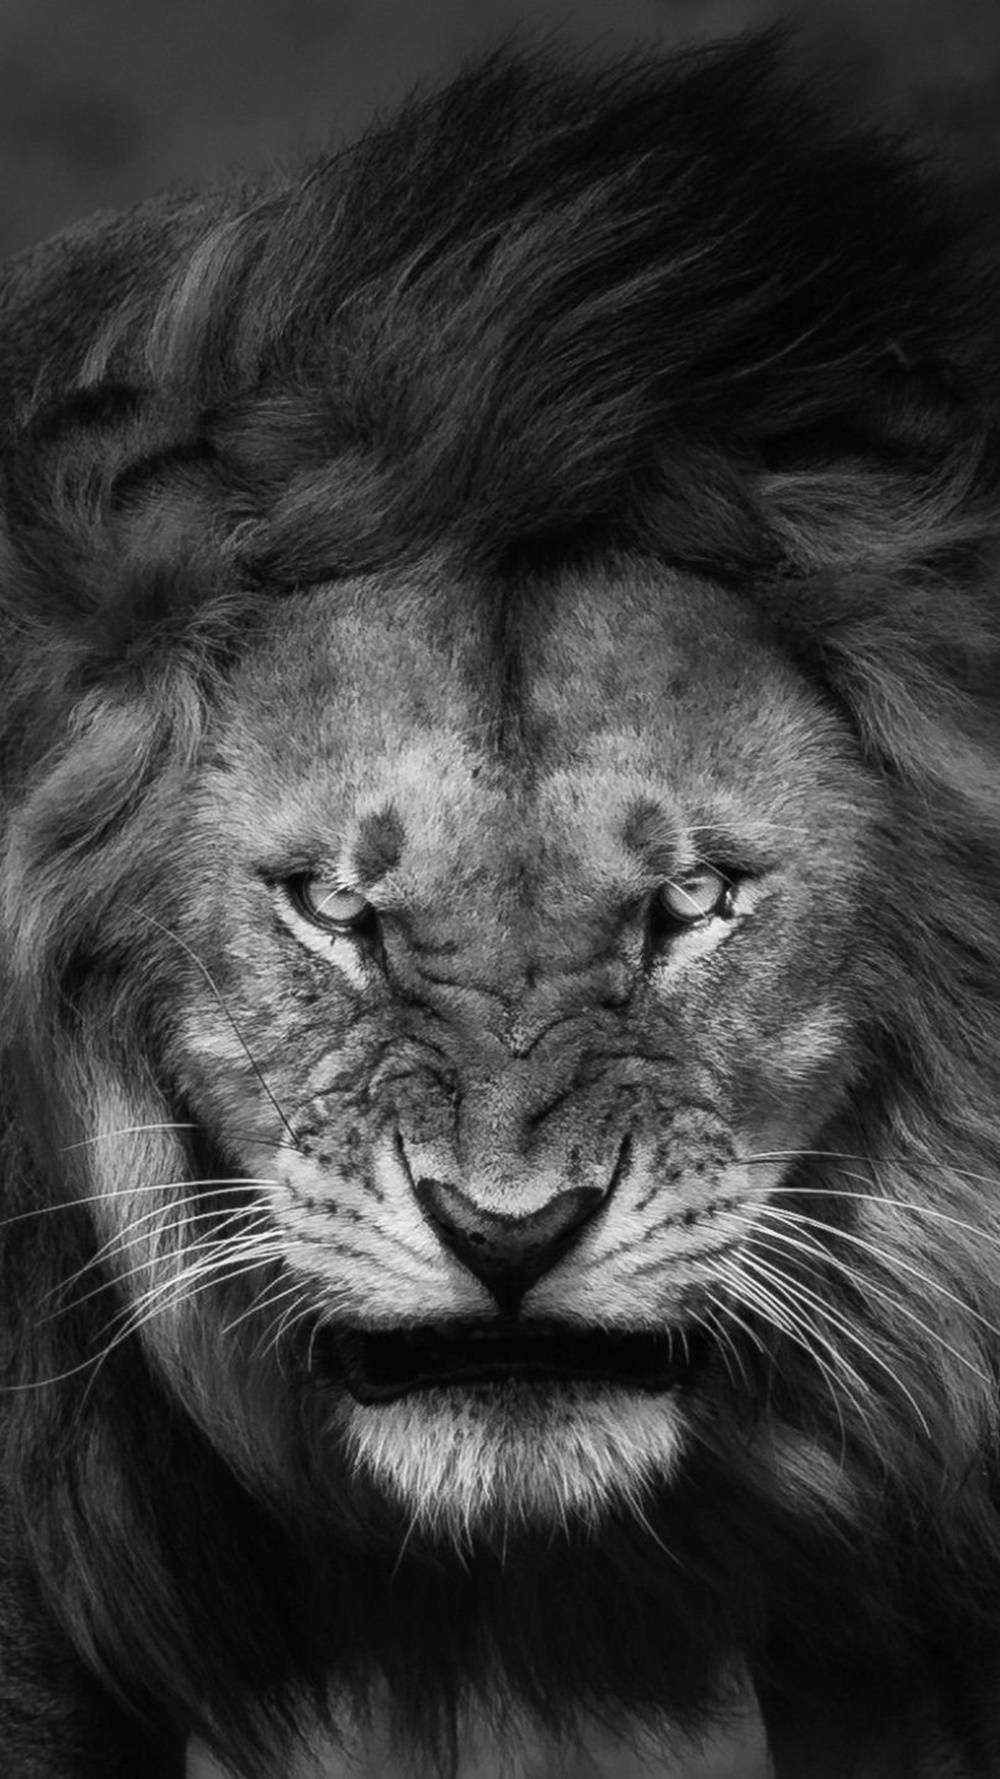 Furious Wild Lion Iphone Wallpaper